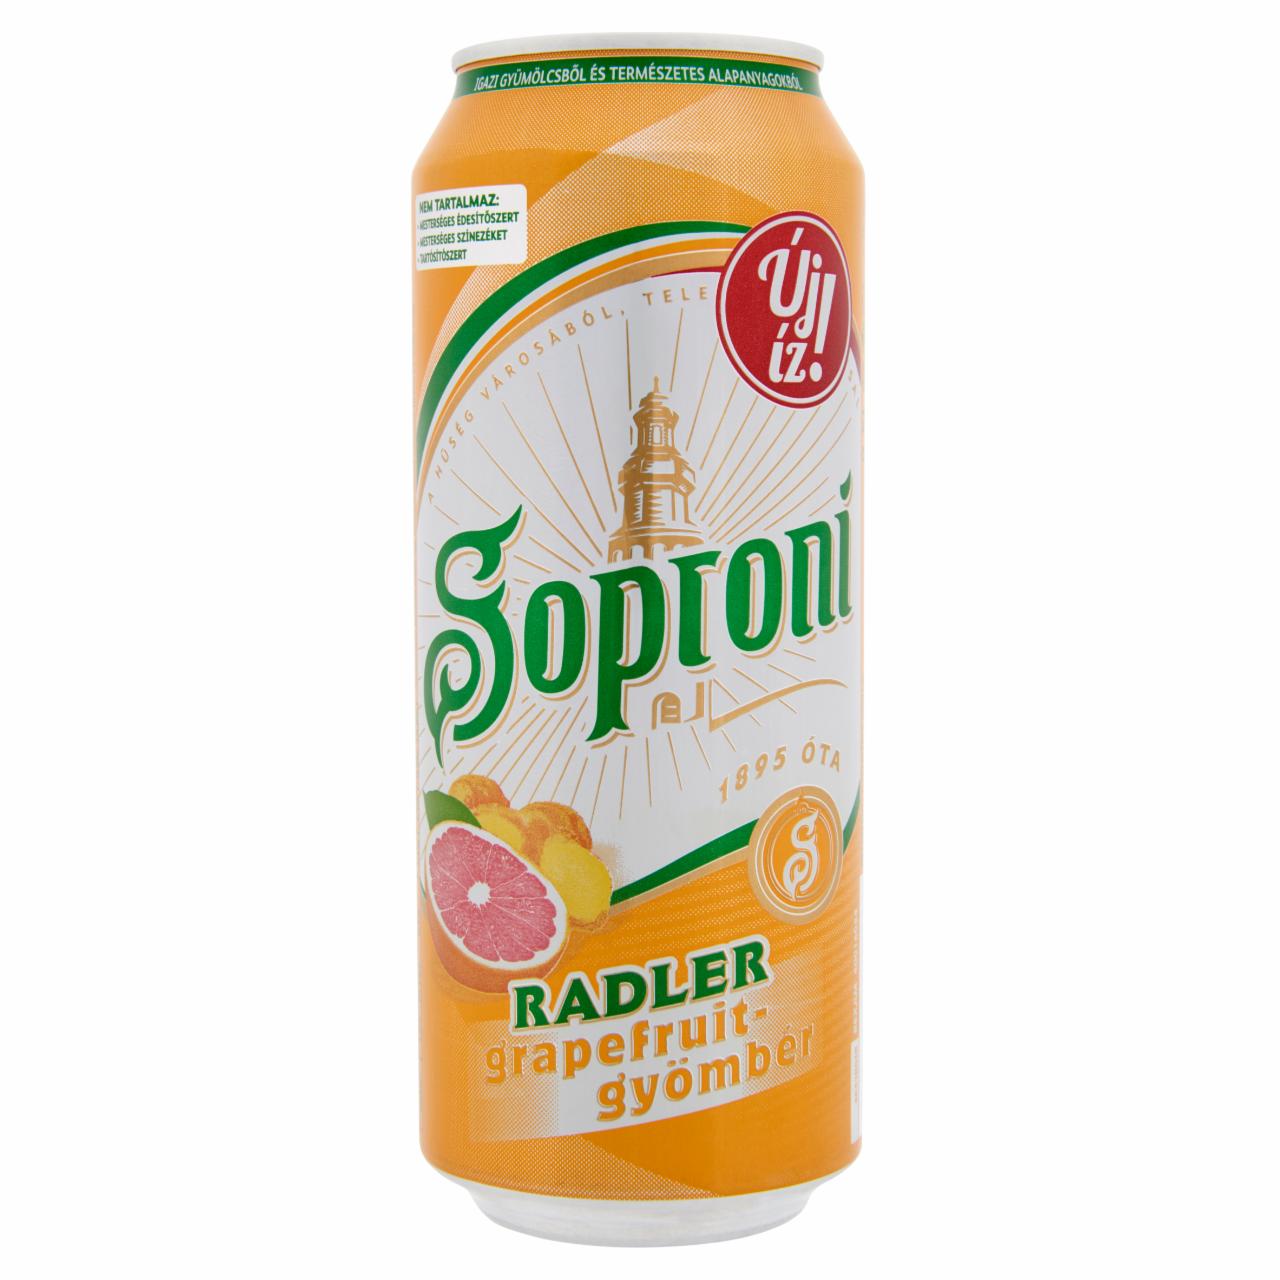 Képek - Soproni Radler grapefruit-gyömbéres sörital 2,0% 0,5 l